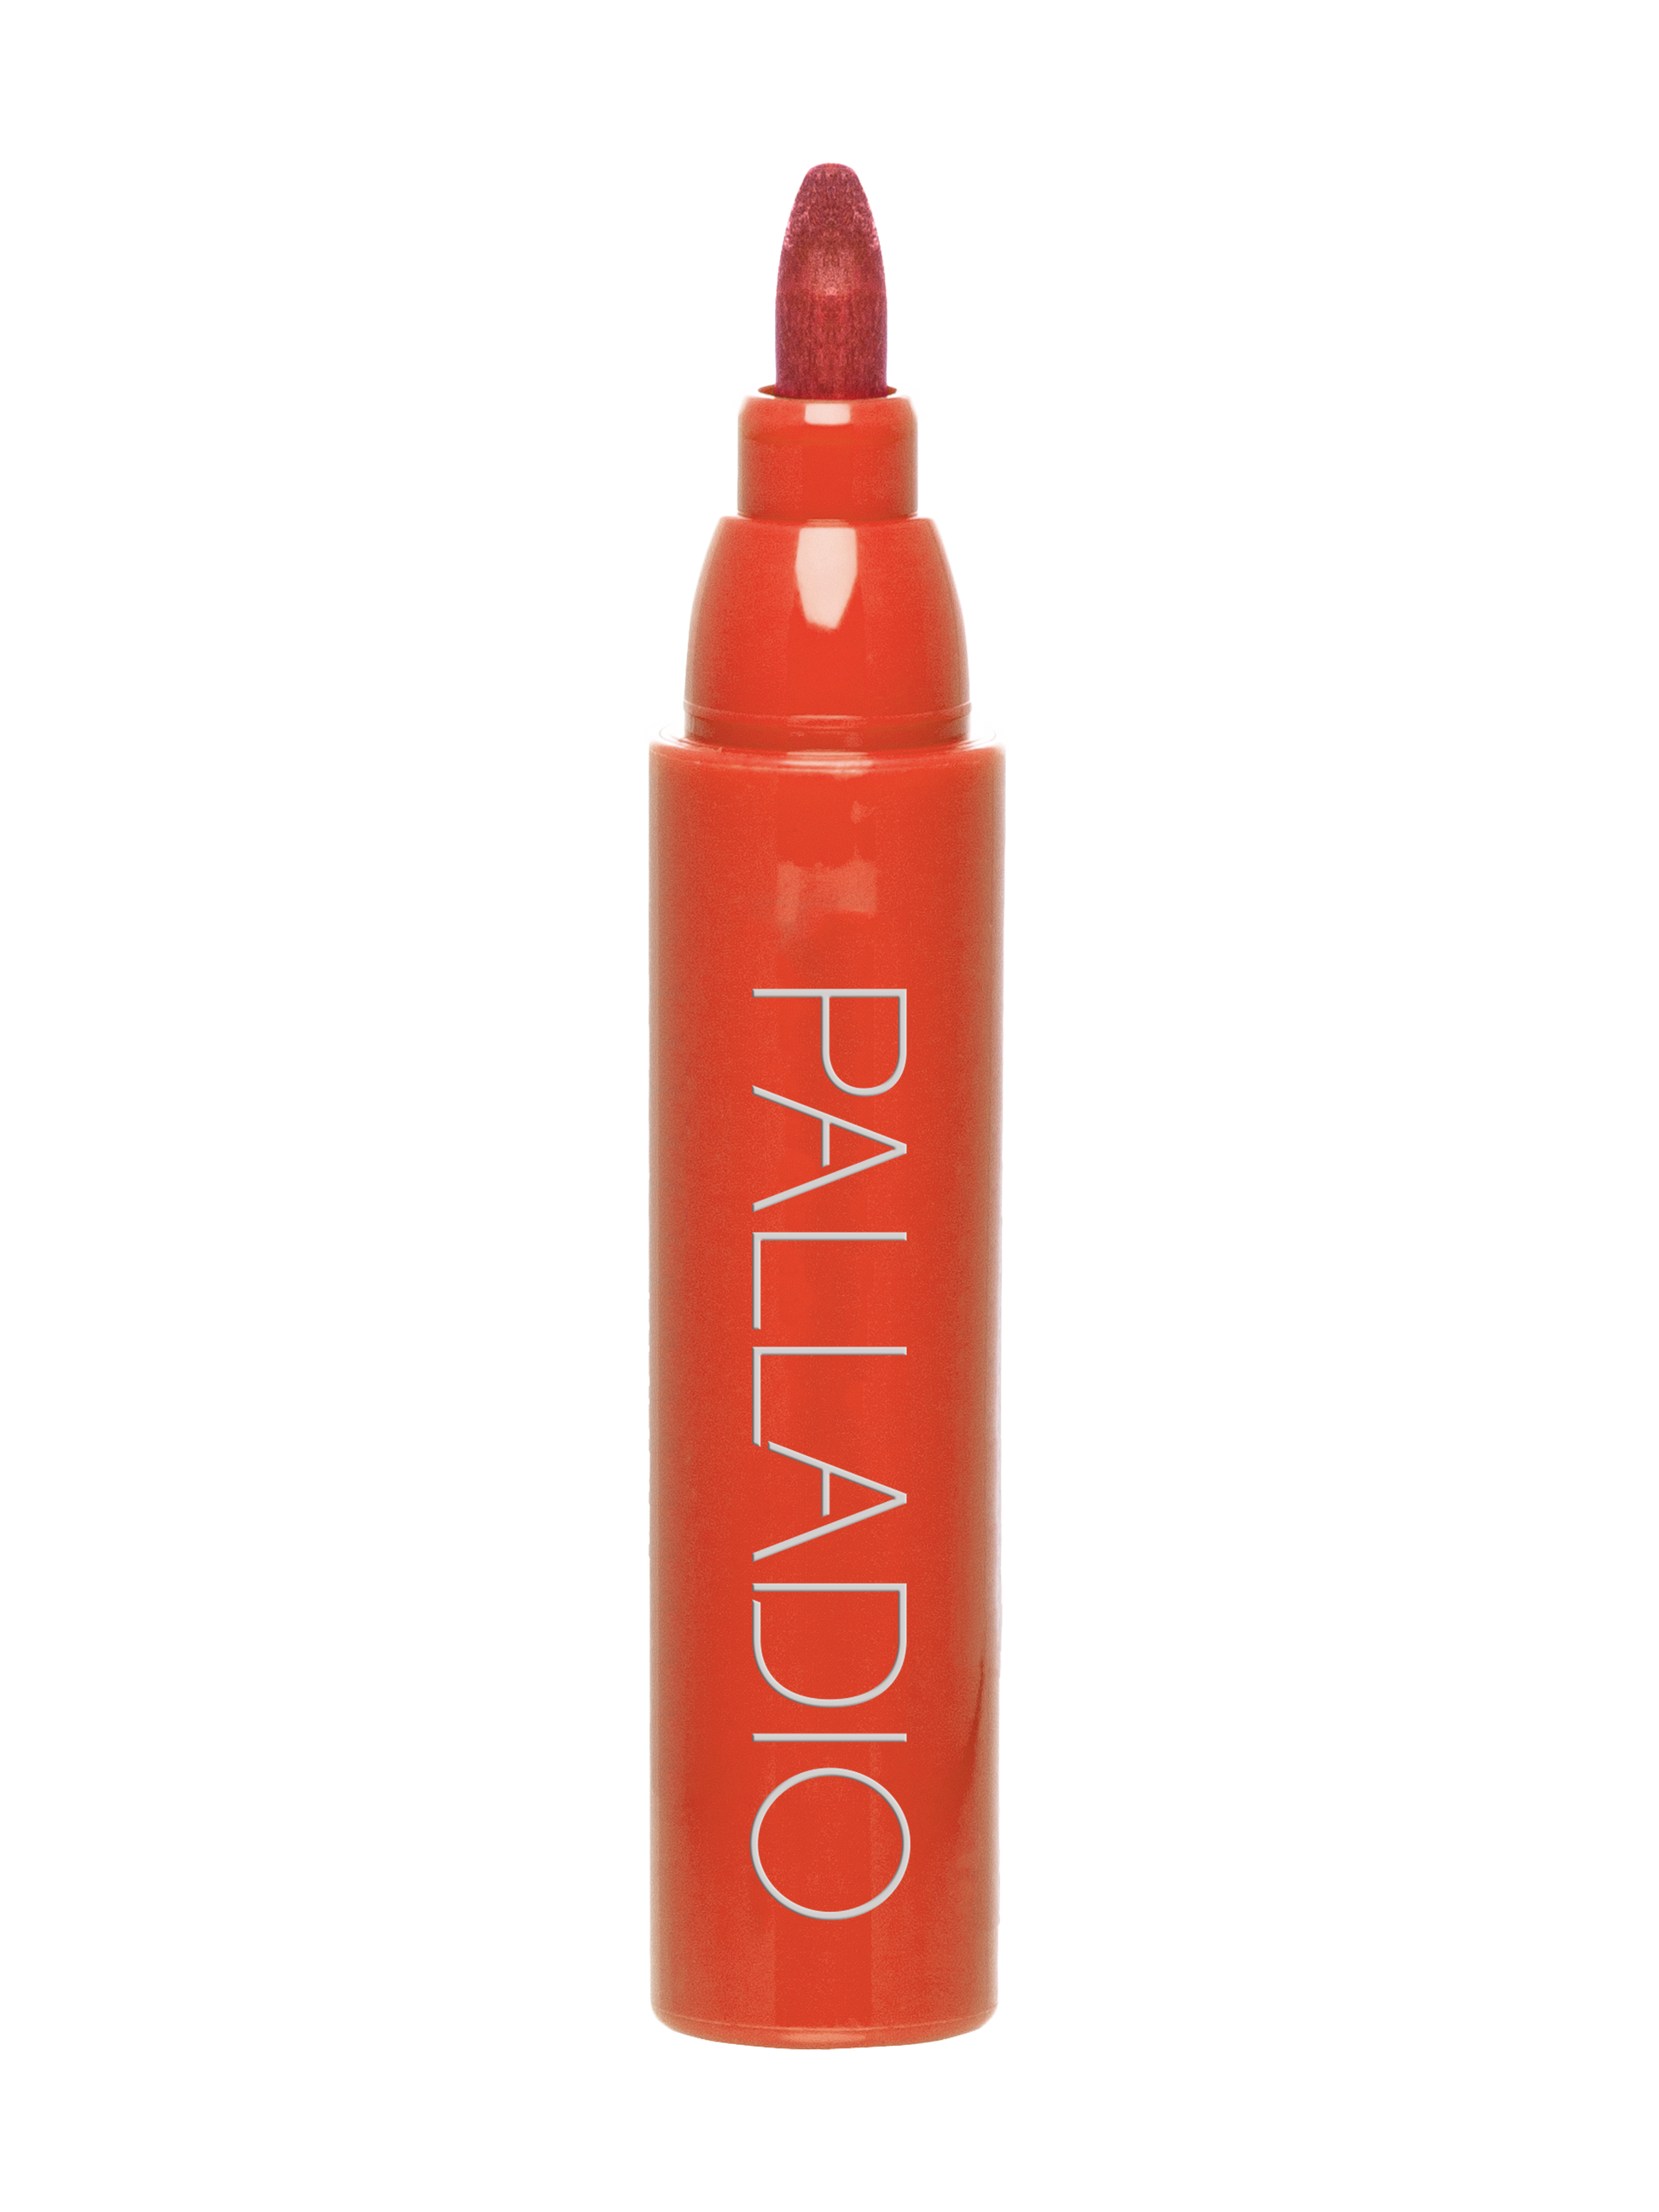 Palladio Lip StainLip ColorPALLADIOColor: Berry Lis06, Mocha Lis05, Nude Lis04, Orchid Lis02, Pinky Lis01, Rose LIS07